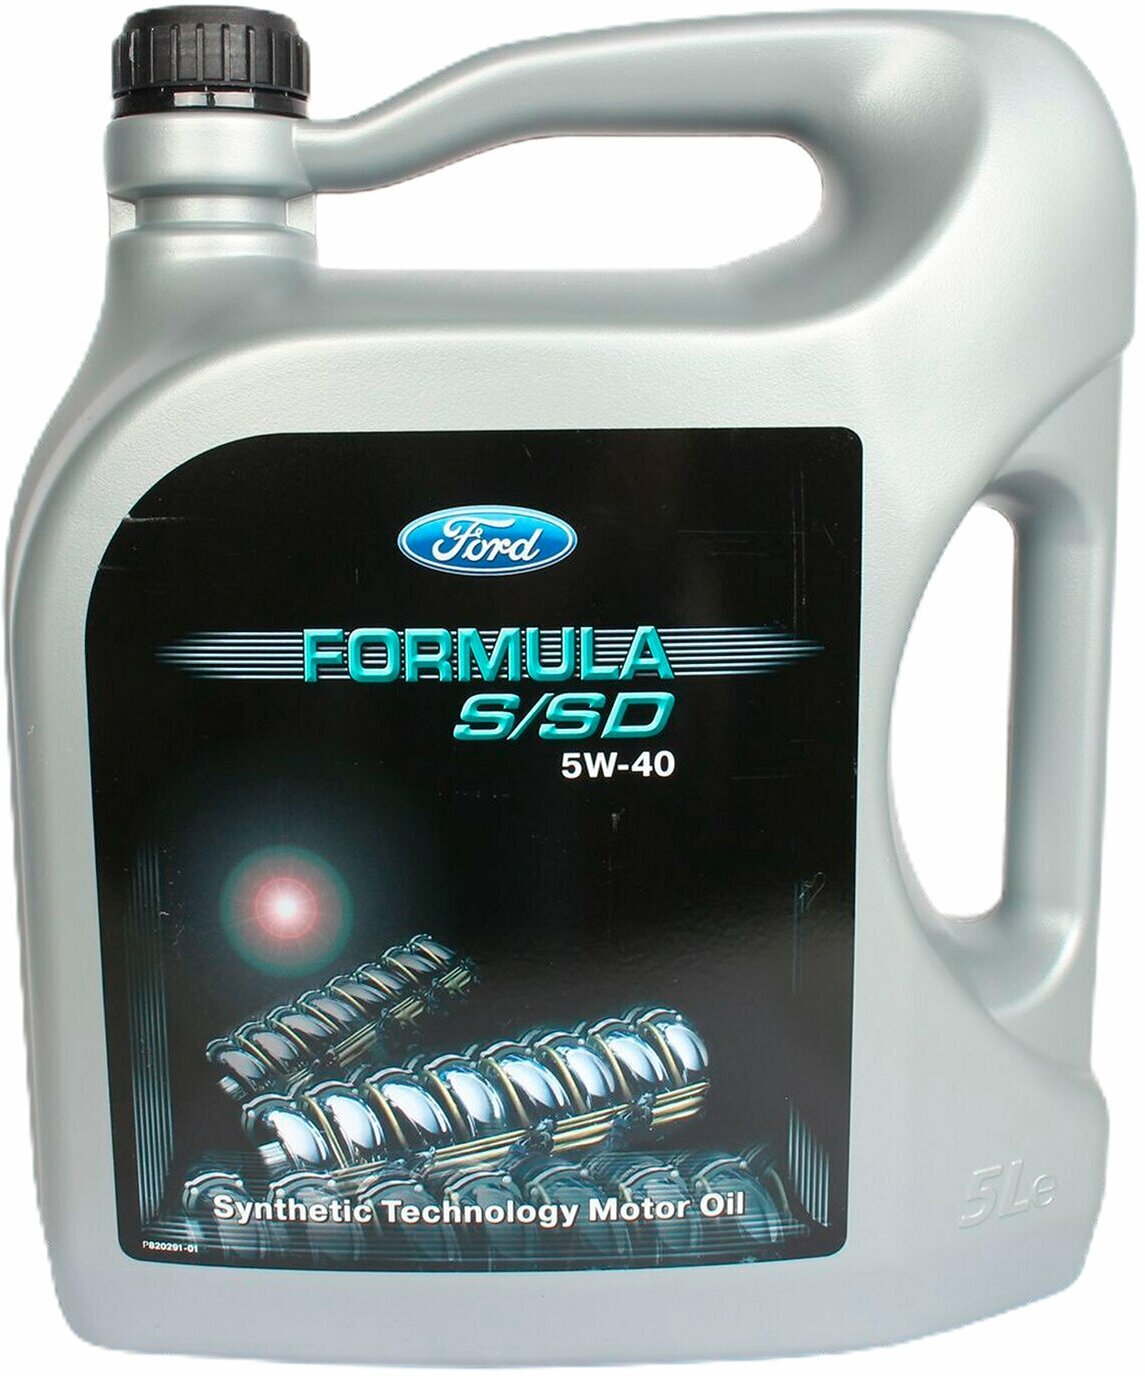 Синтетическое моторное масло Ford Formula S/SD 5W40, 5 л, 4.675 кг, 1 шт